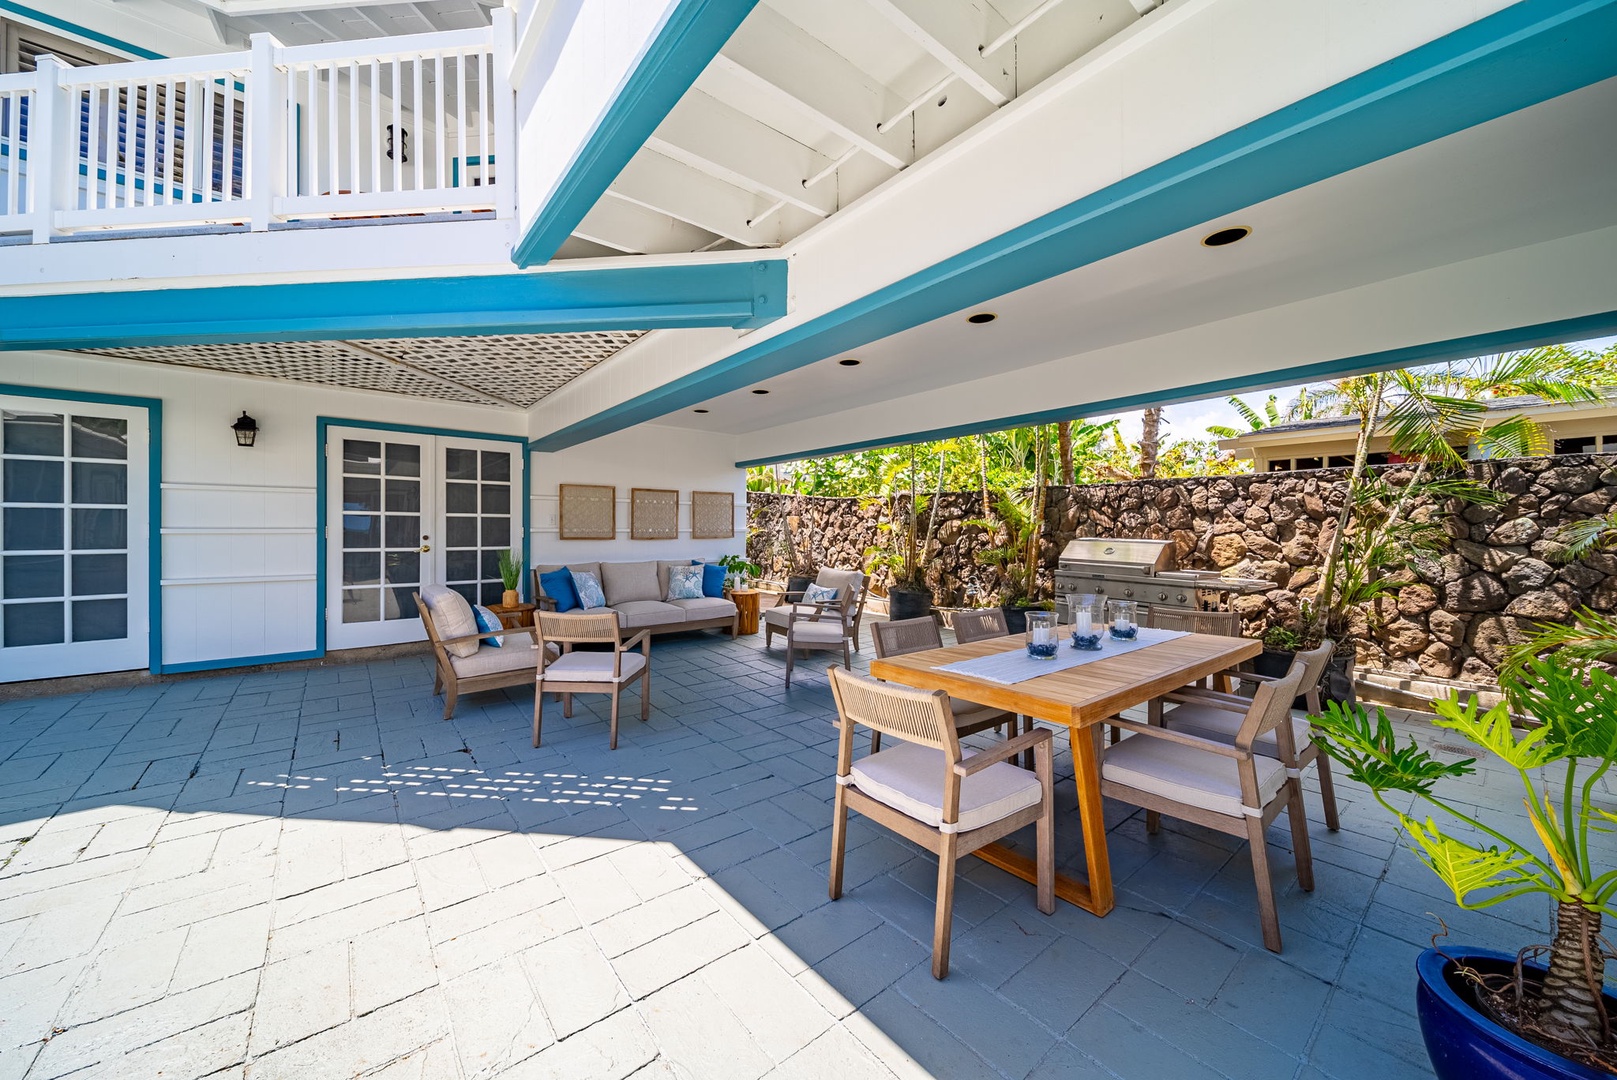 Waimanalo Vacation Rentals, Mana Kai at Waimanalo - Center courtyard lounge with alfresco dining option